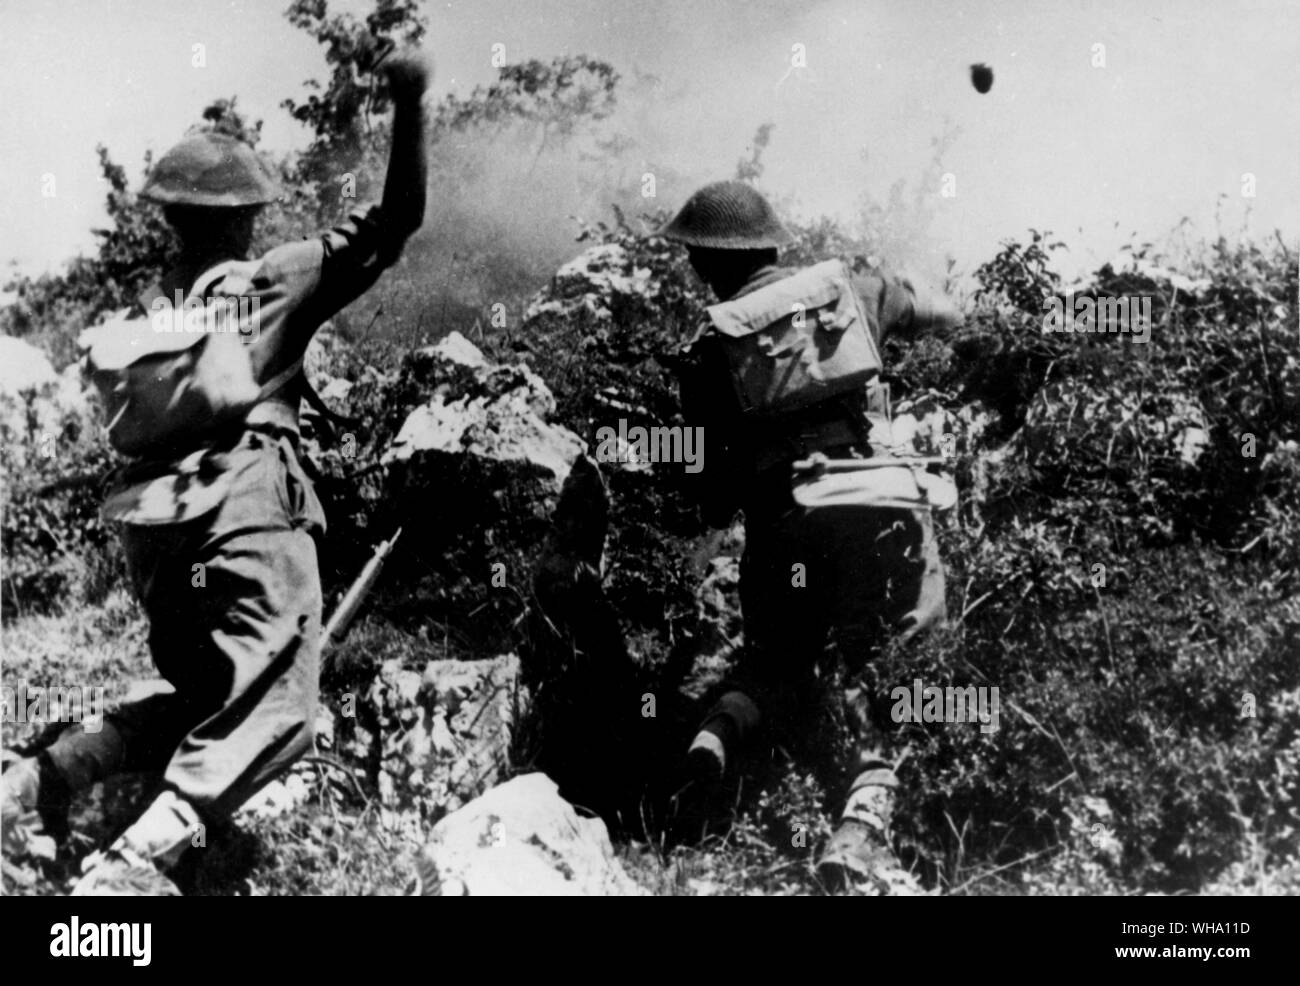 WW2: British troops throw hand grenades. Stock Photo